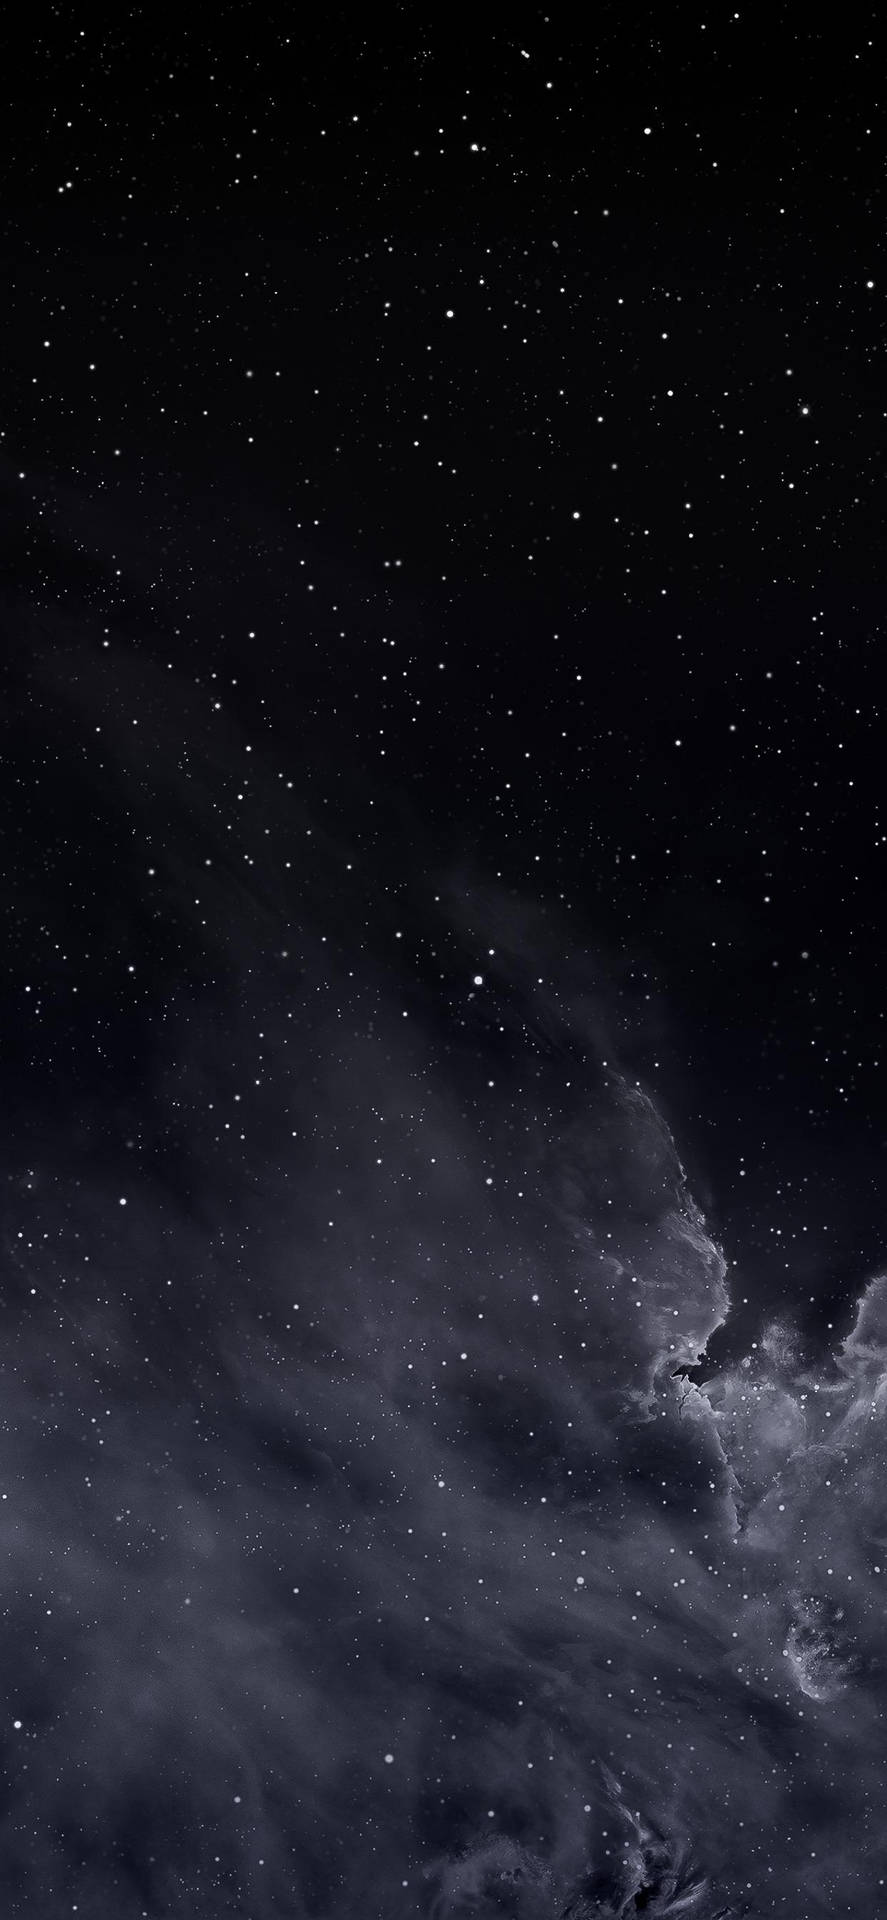 Stars In Cloudy Sky In Dark Mode Wallpaper